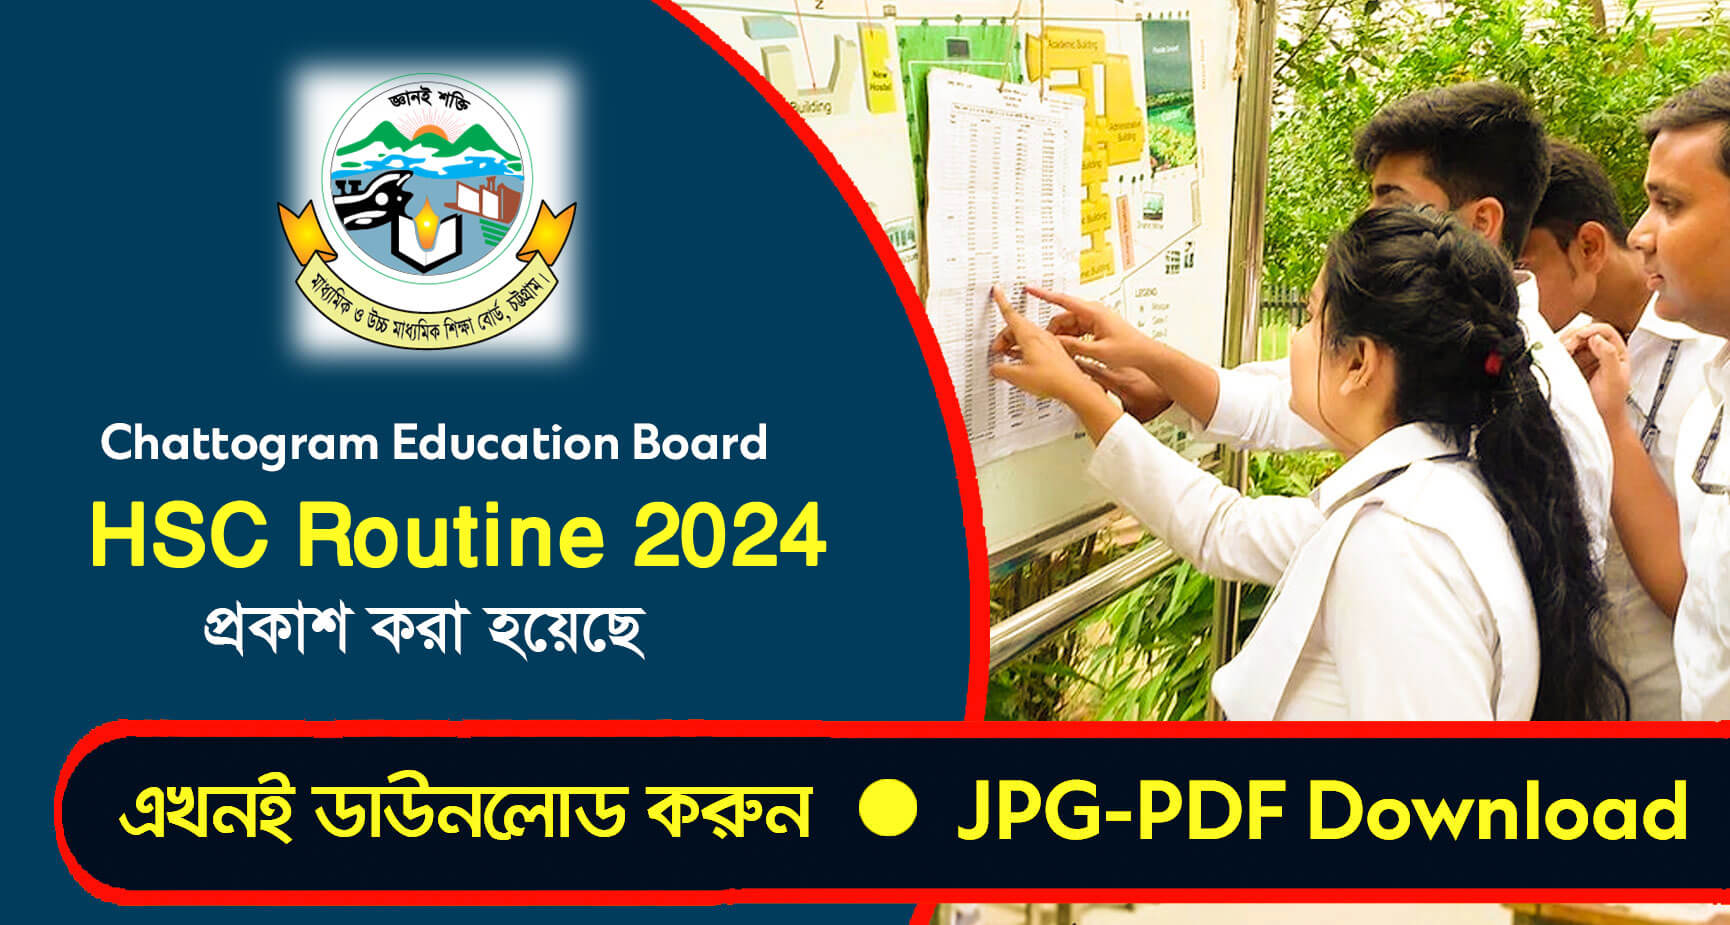 Dhaka Board HSC Routine 2024